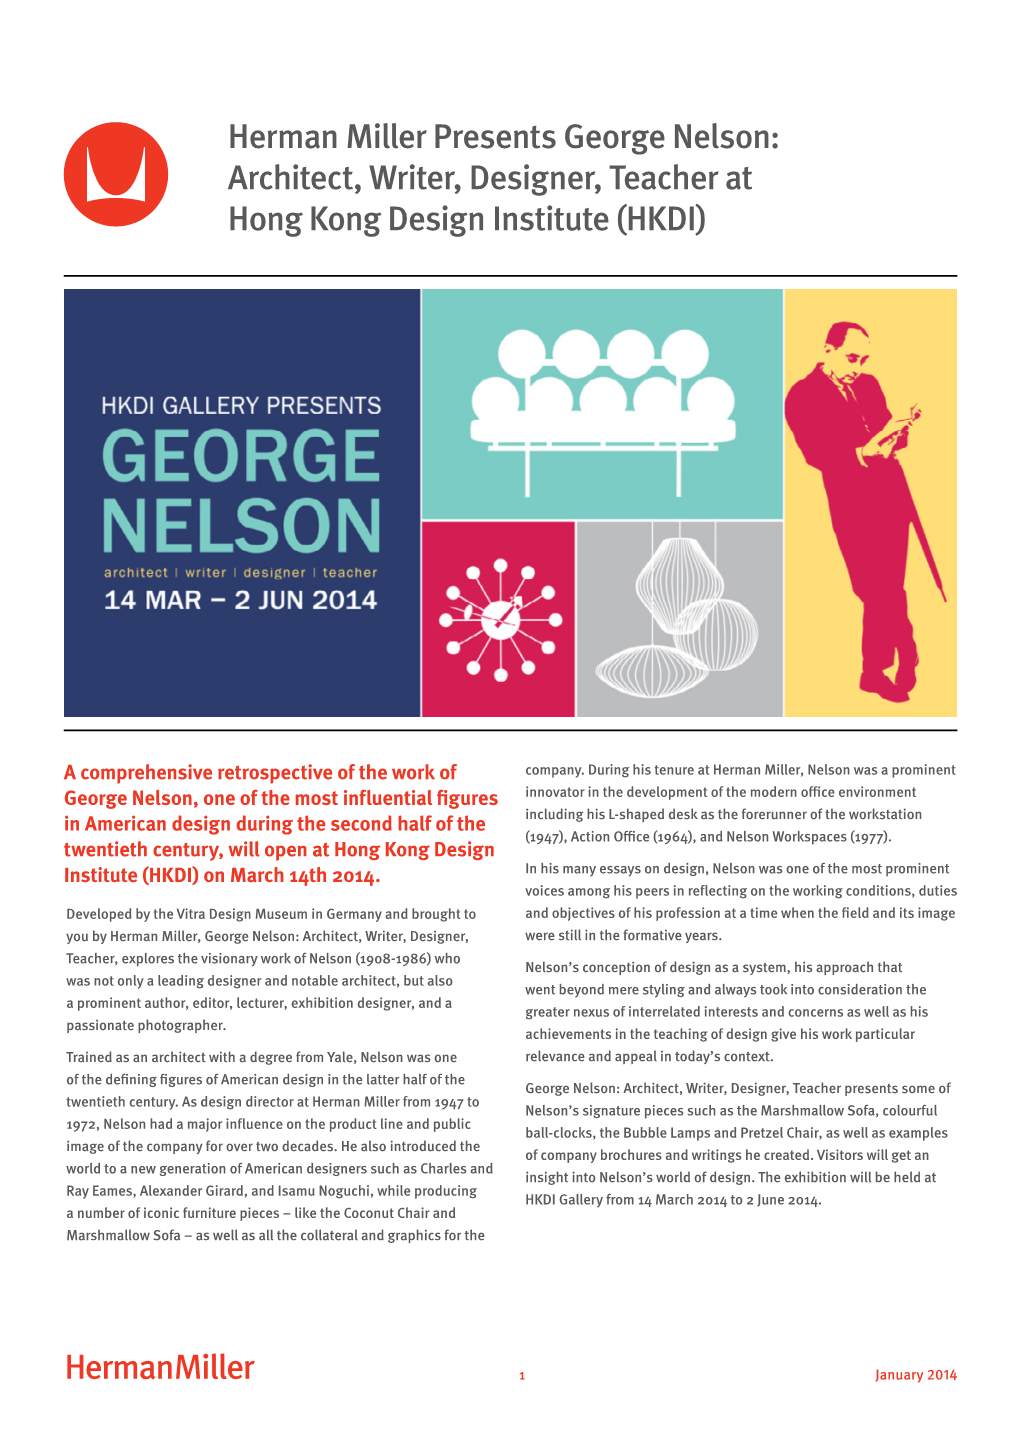 Herman Miller Presents George Nelson: Architect, Writer, Designer, Teacher at Hong Kong Design Institute (HKDI)